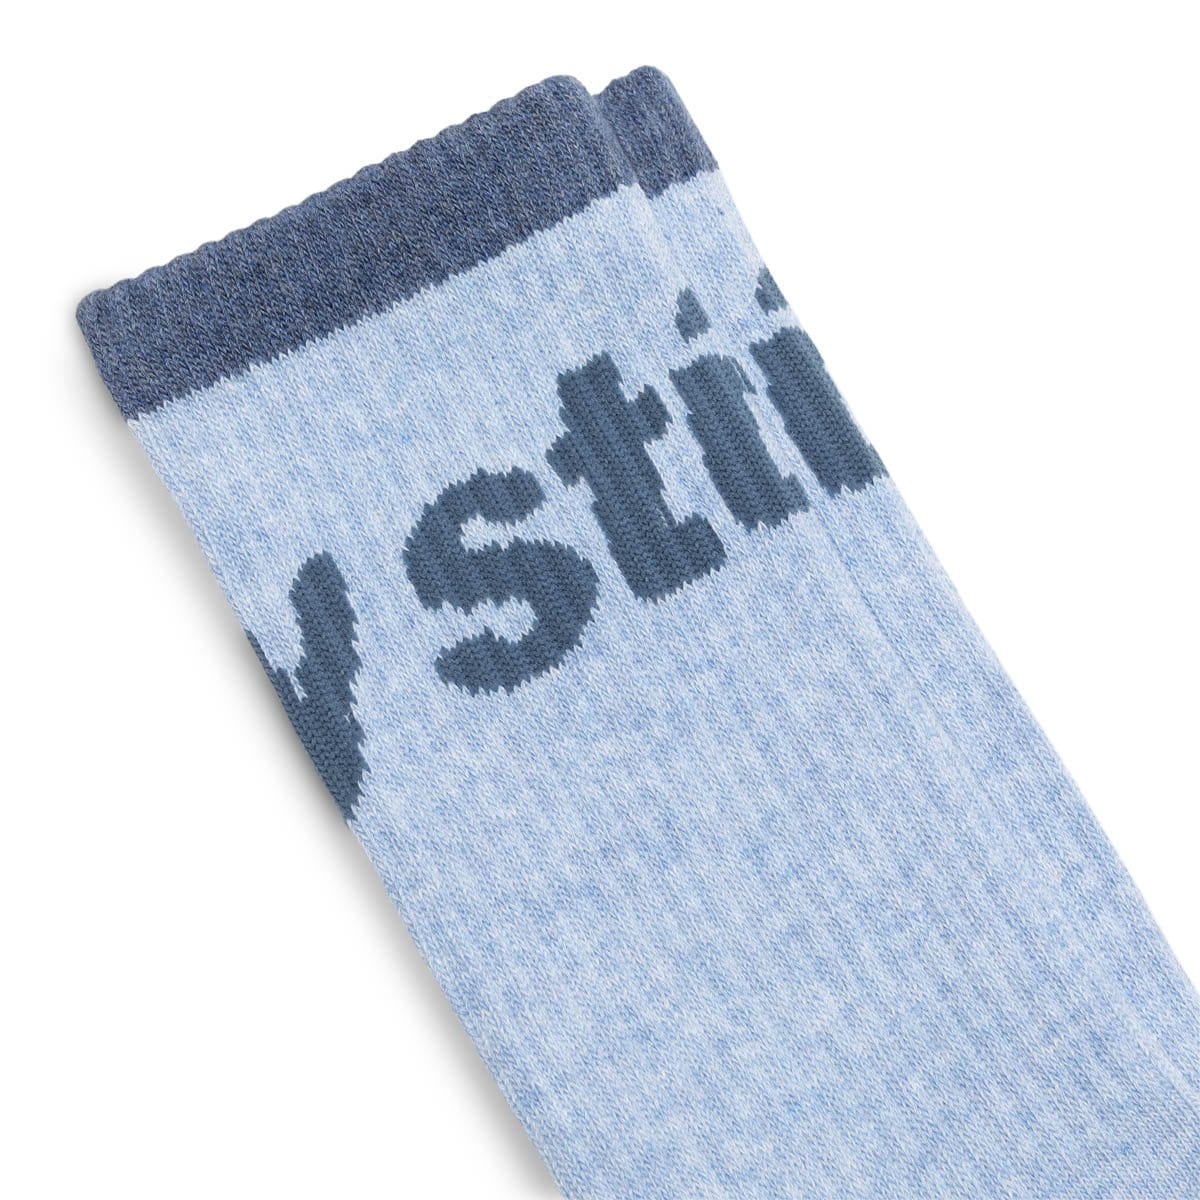 Stüssy Socks BLUE / 8-13 LOGO JACQUARD TRAIL SOCKS